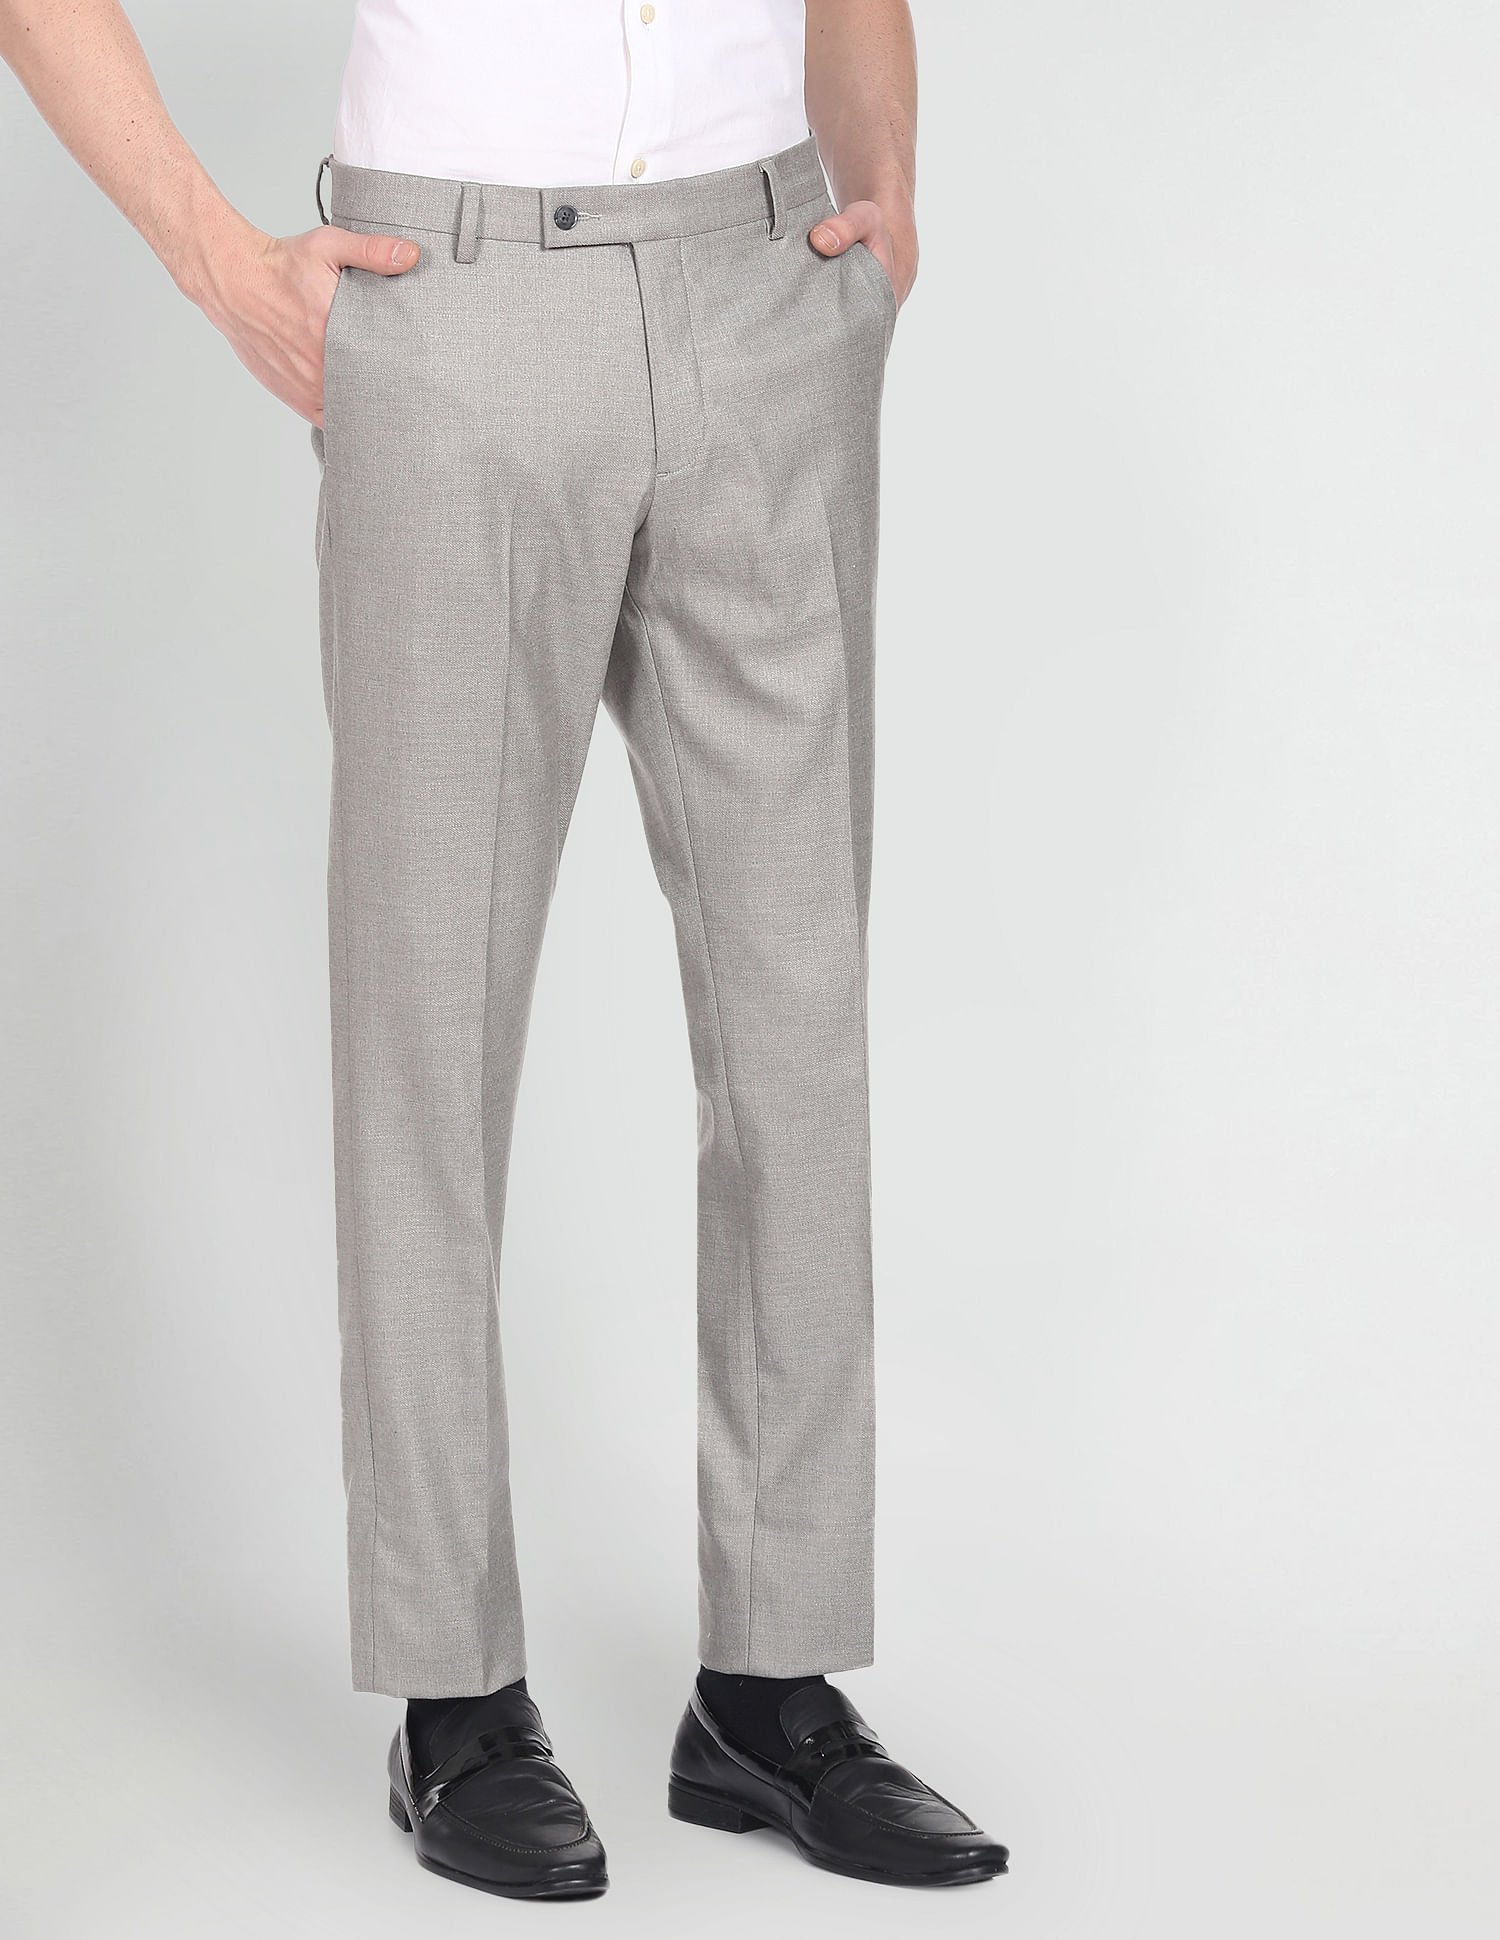 Buy Arrow Tailored Autoflex Formal Trousers - NNNOW.com